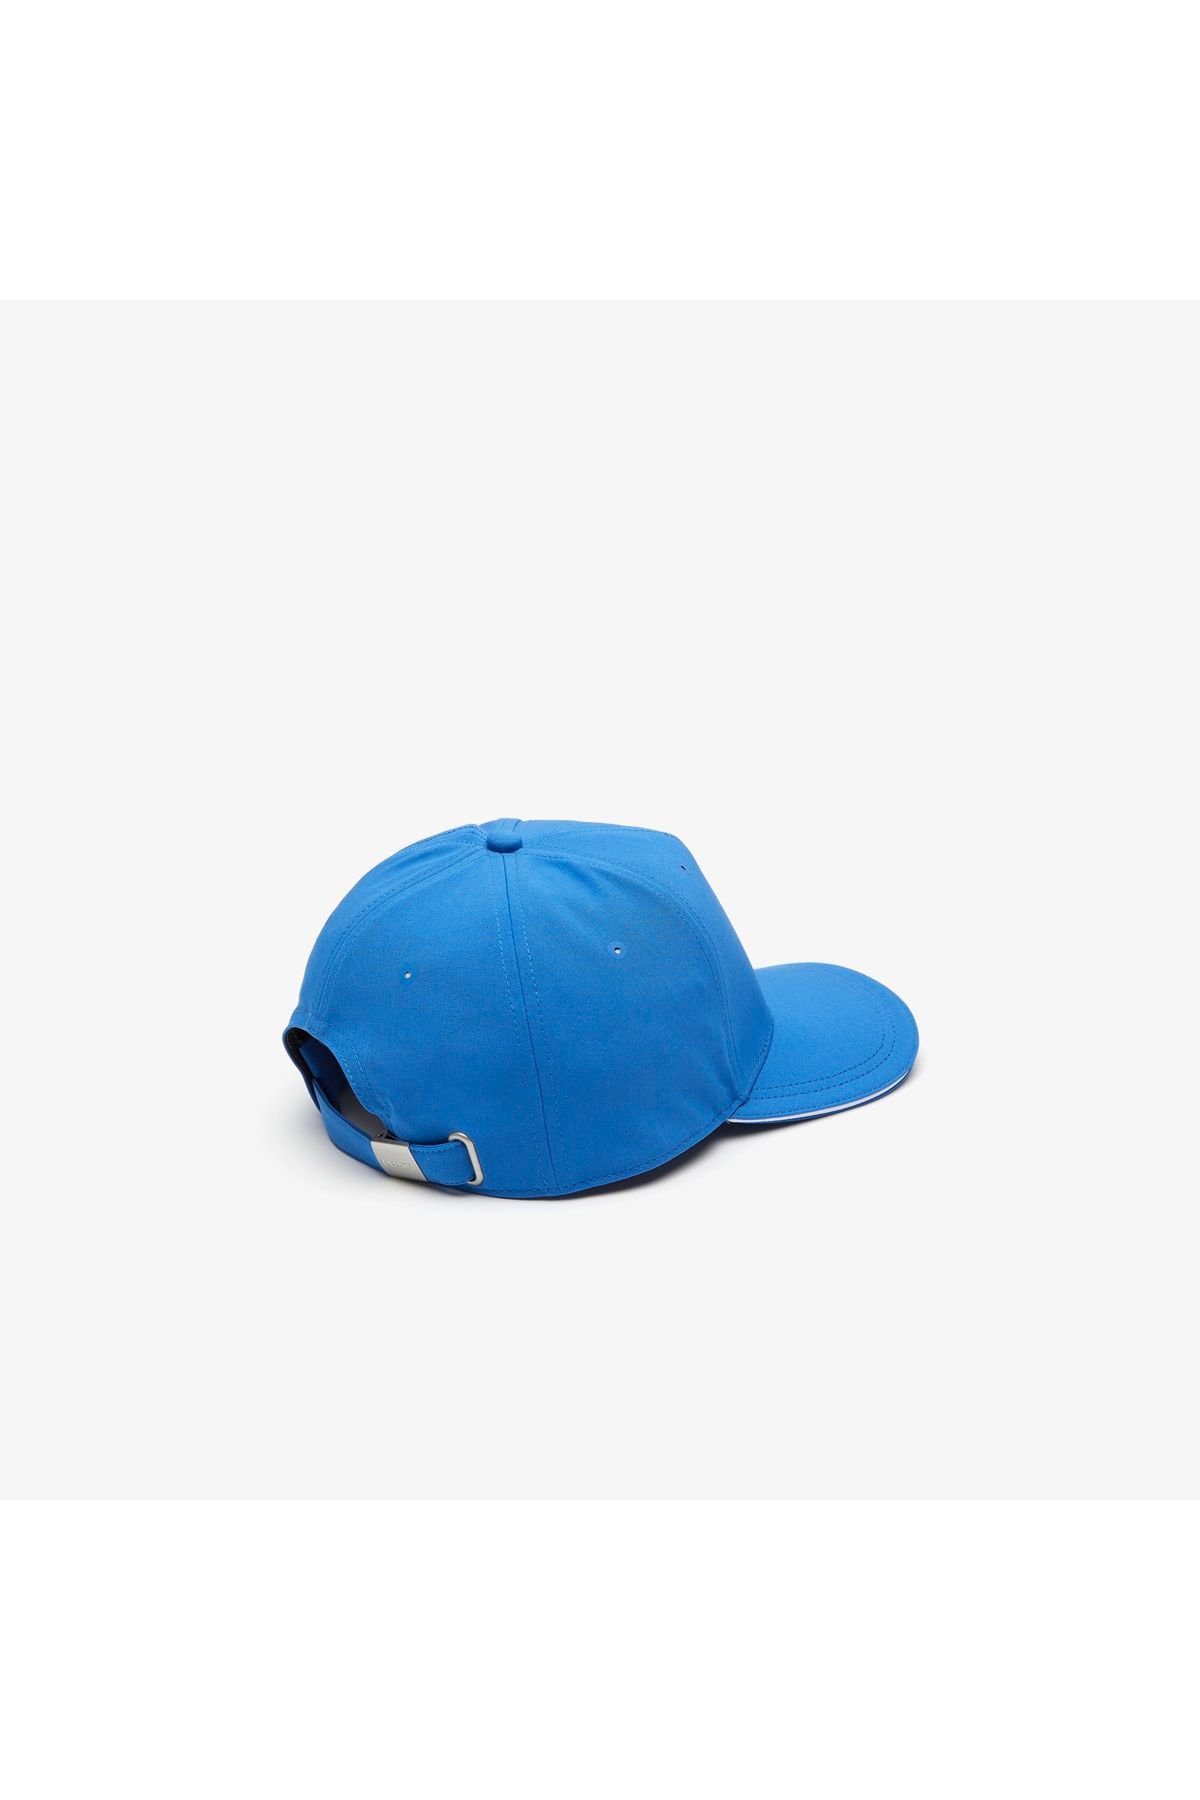 Lacoste کلاه آبی یونیکس